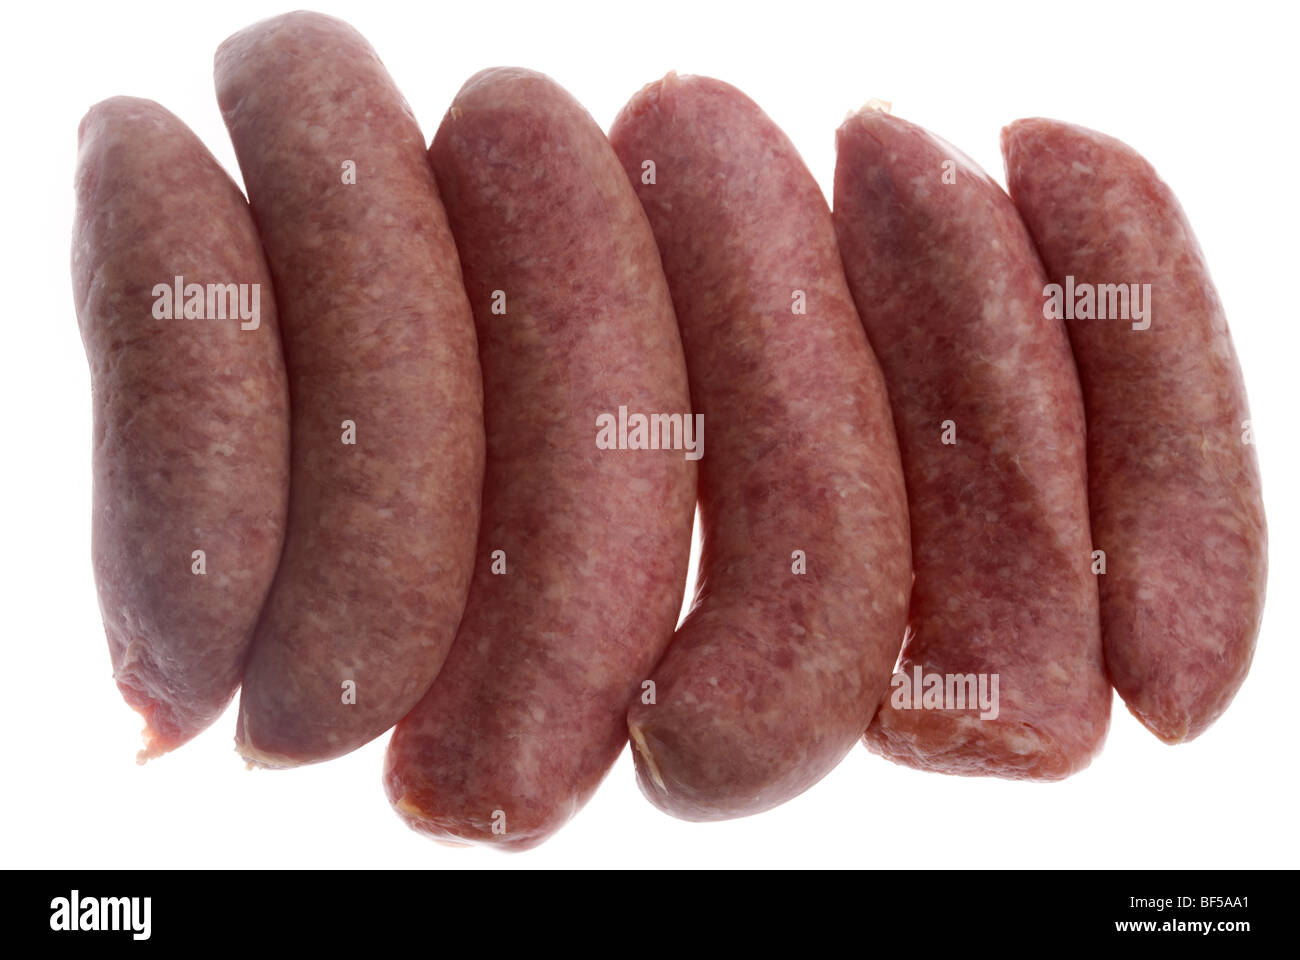 raw links of pork sausage from organic british saddleback pigs reared in ireland Stock Photo